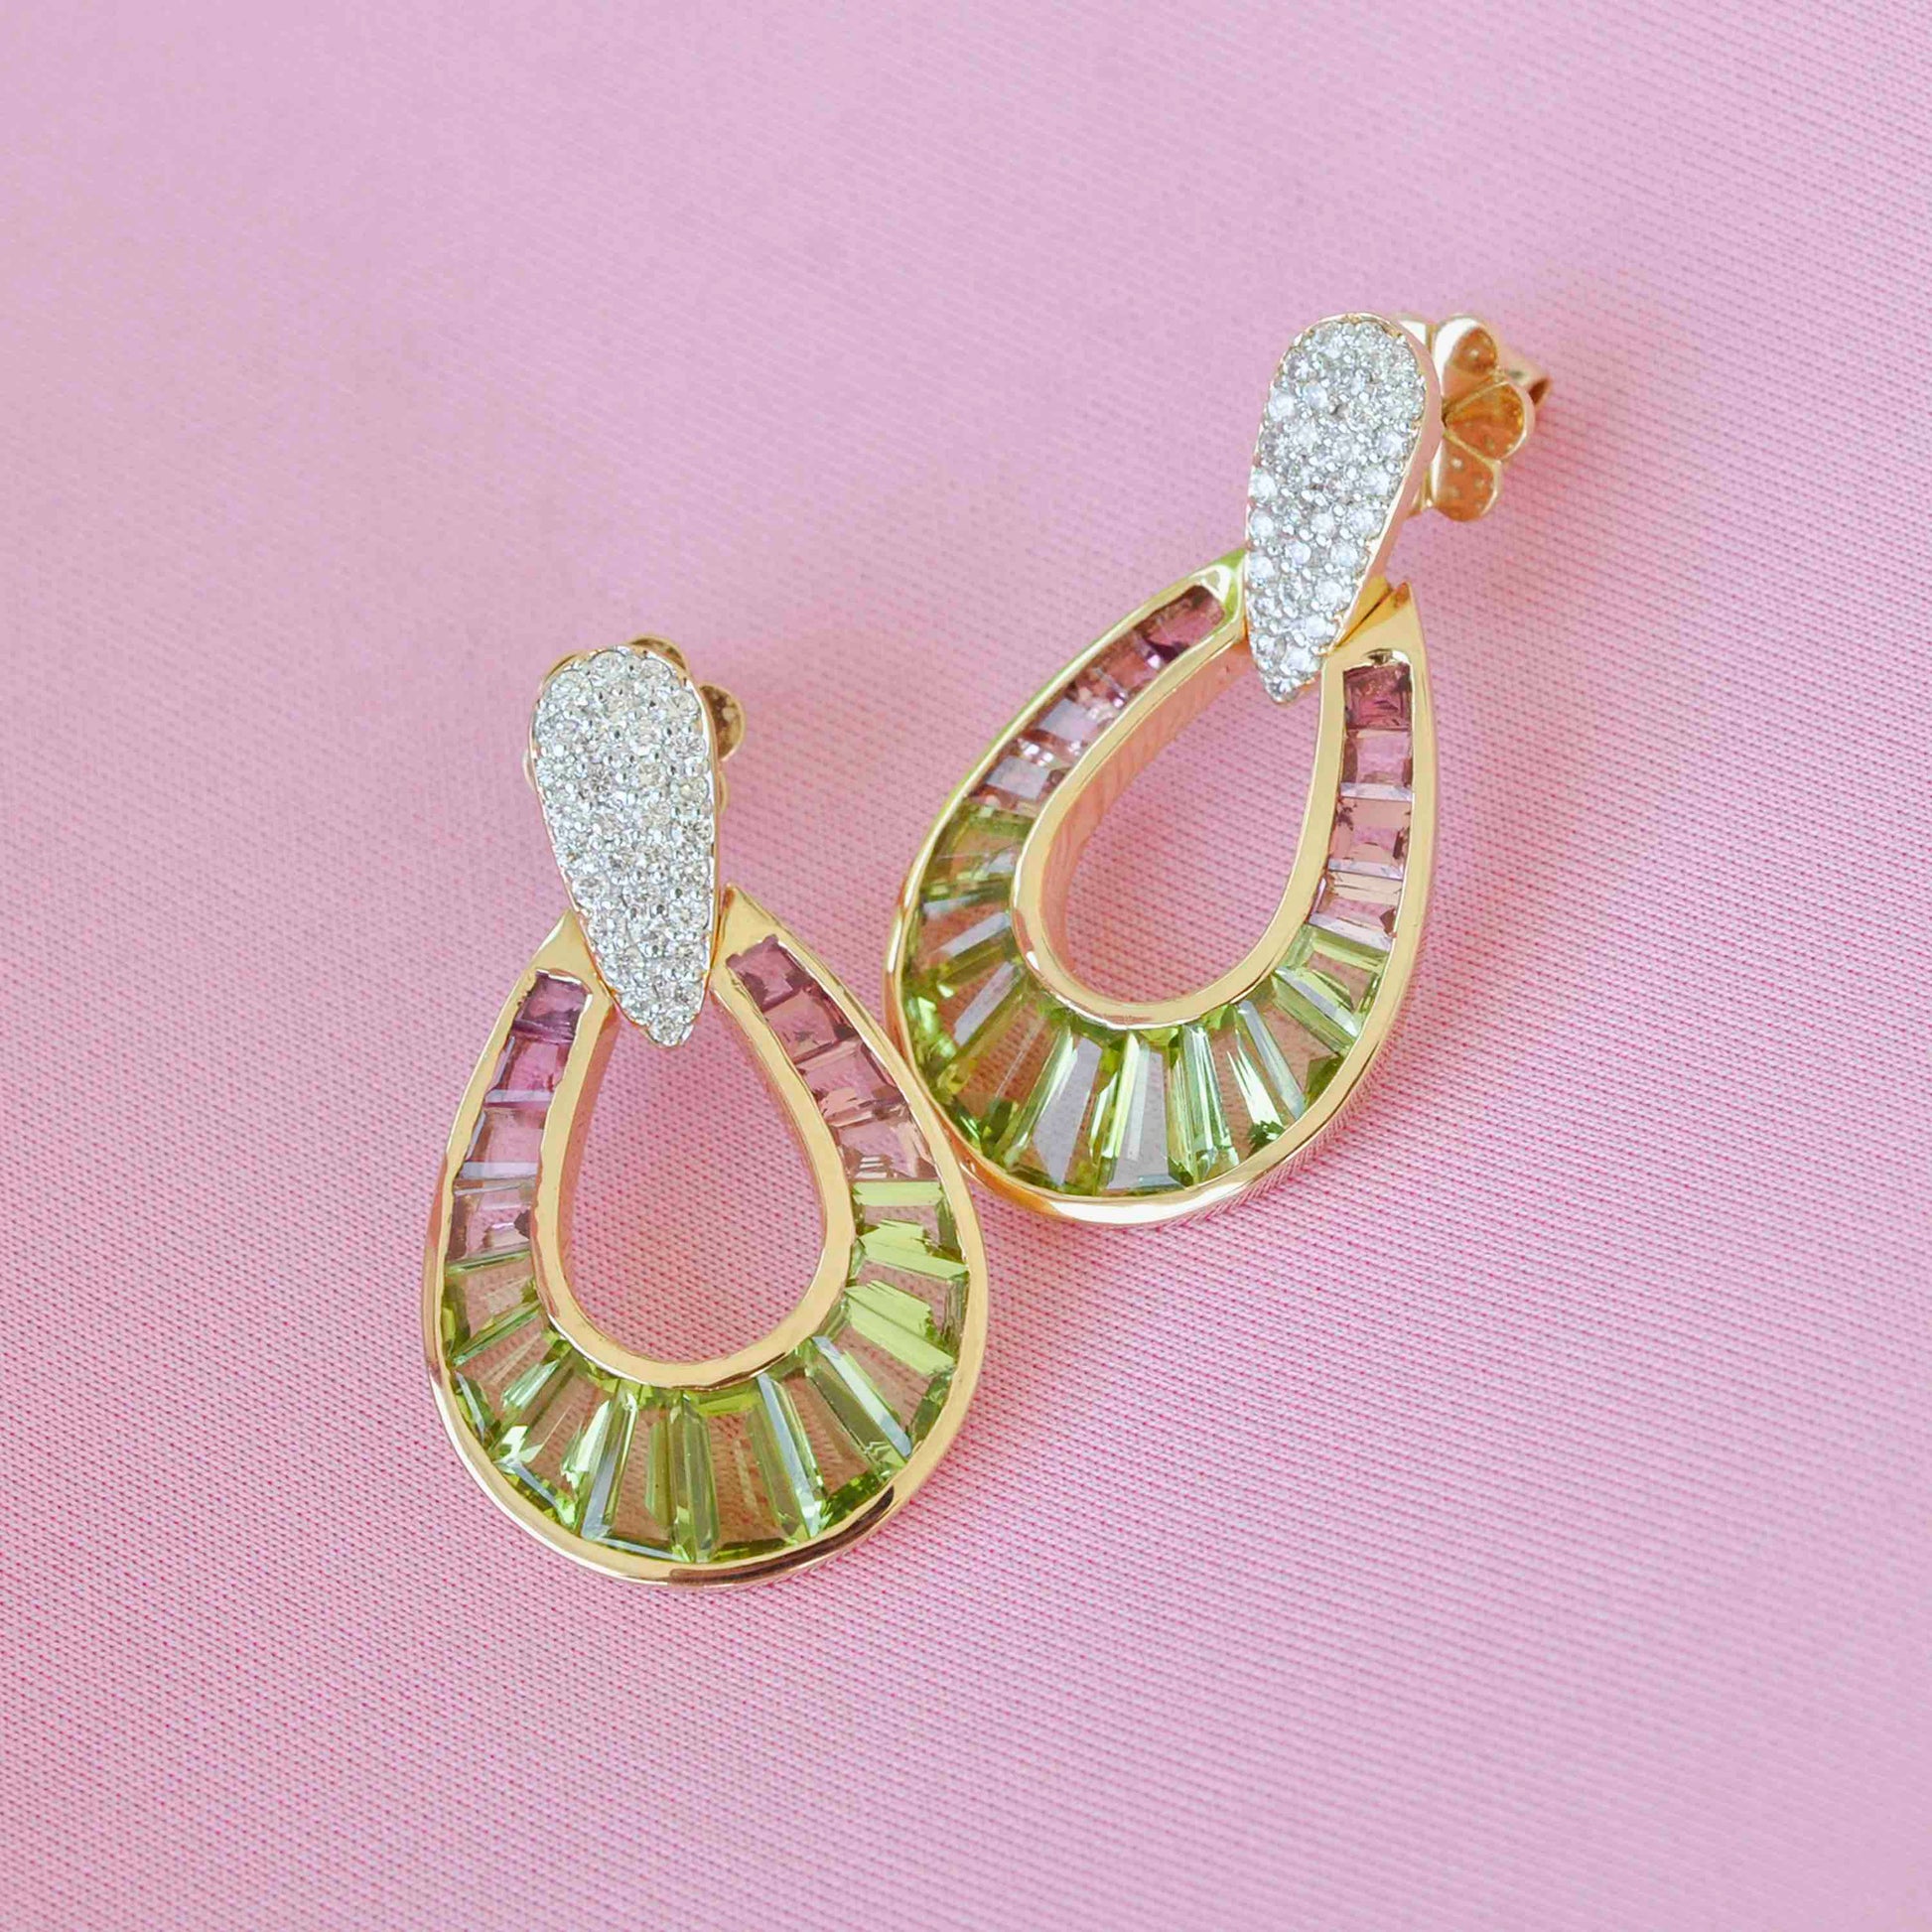 raindrop dangle drop earrings with colorful gemstones